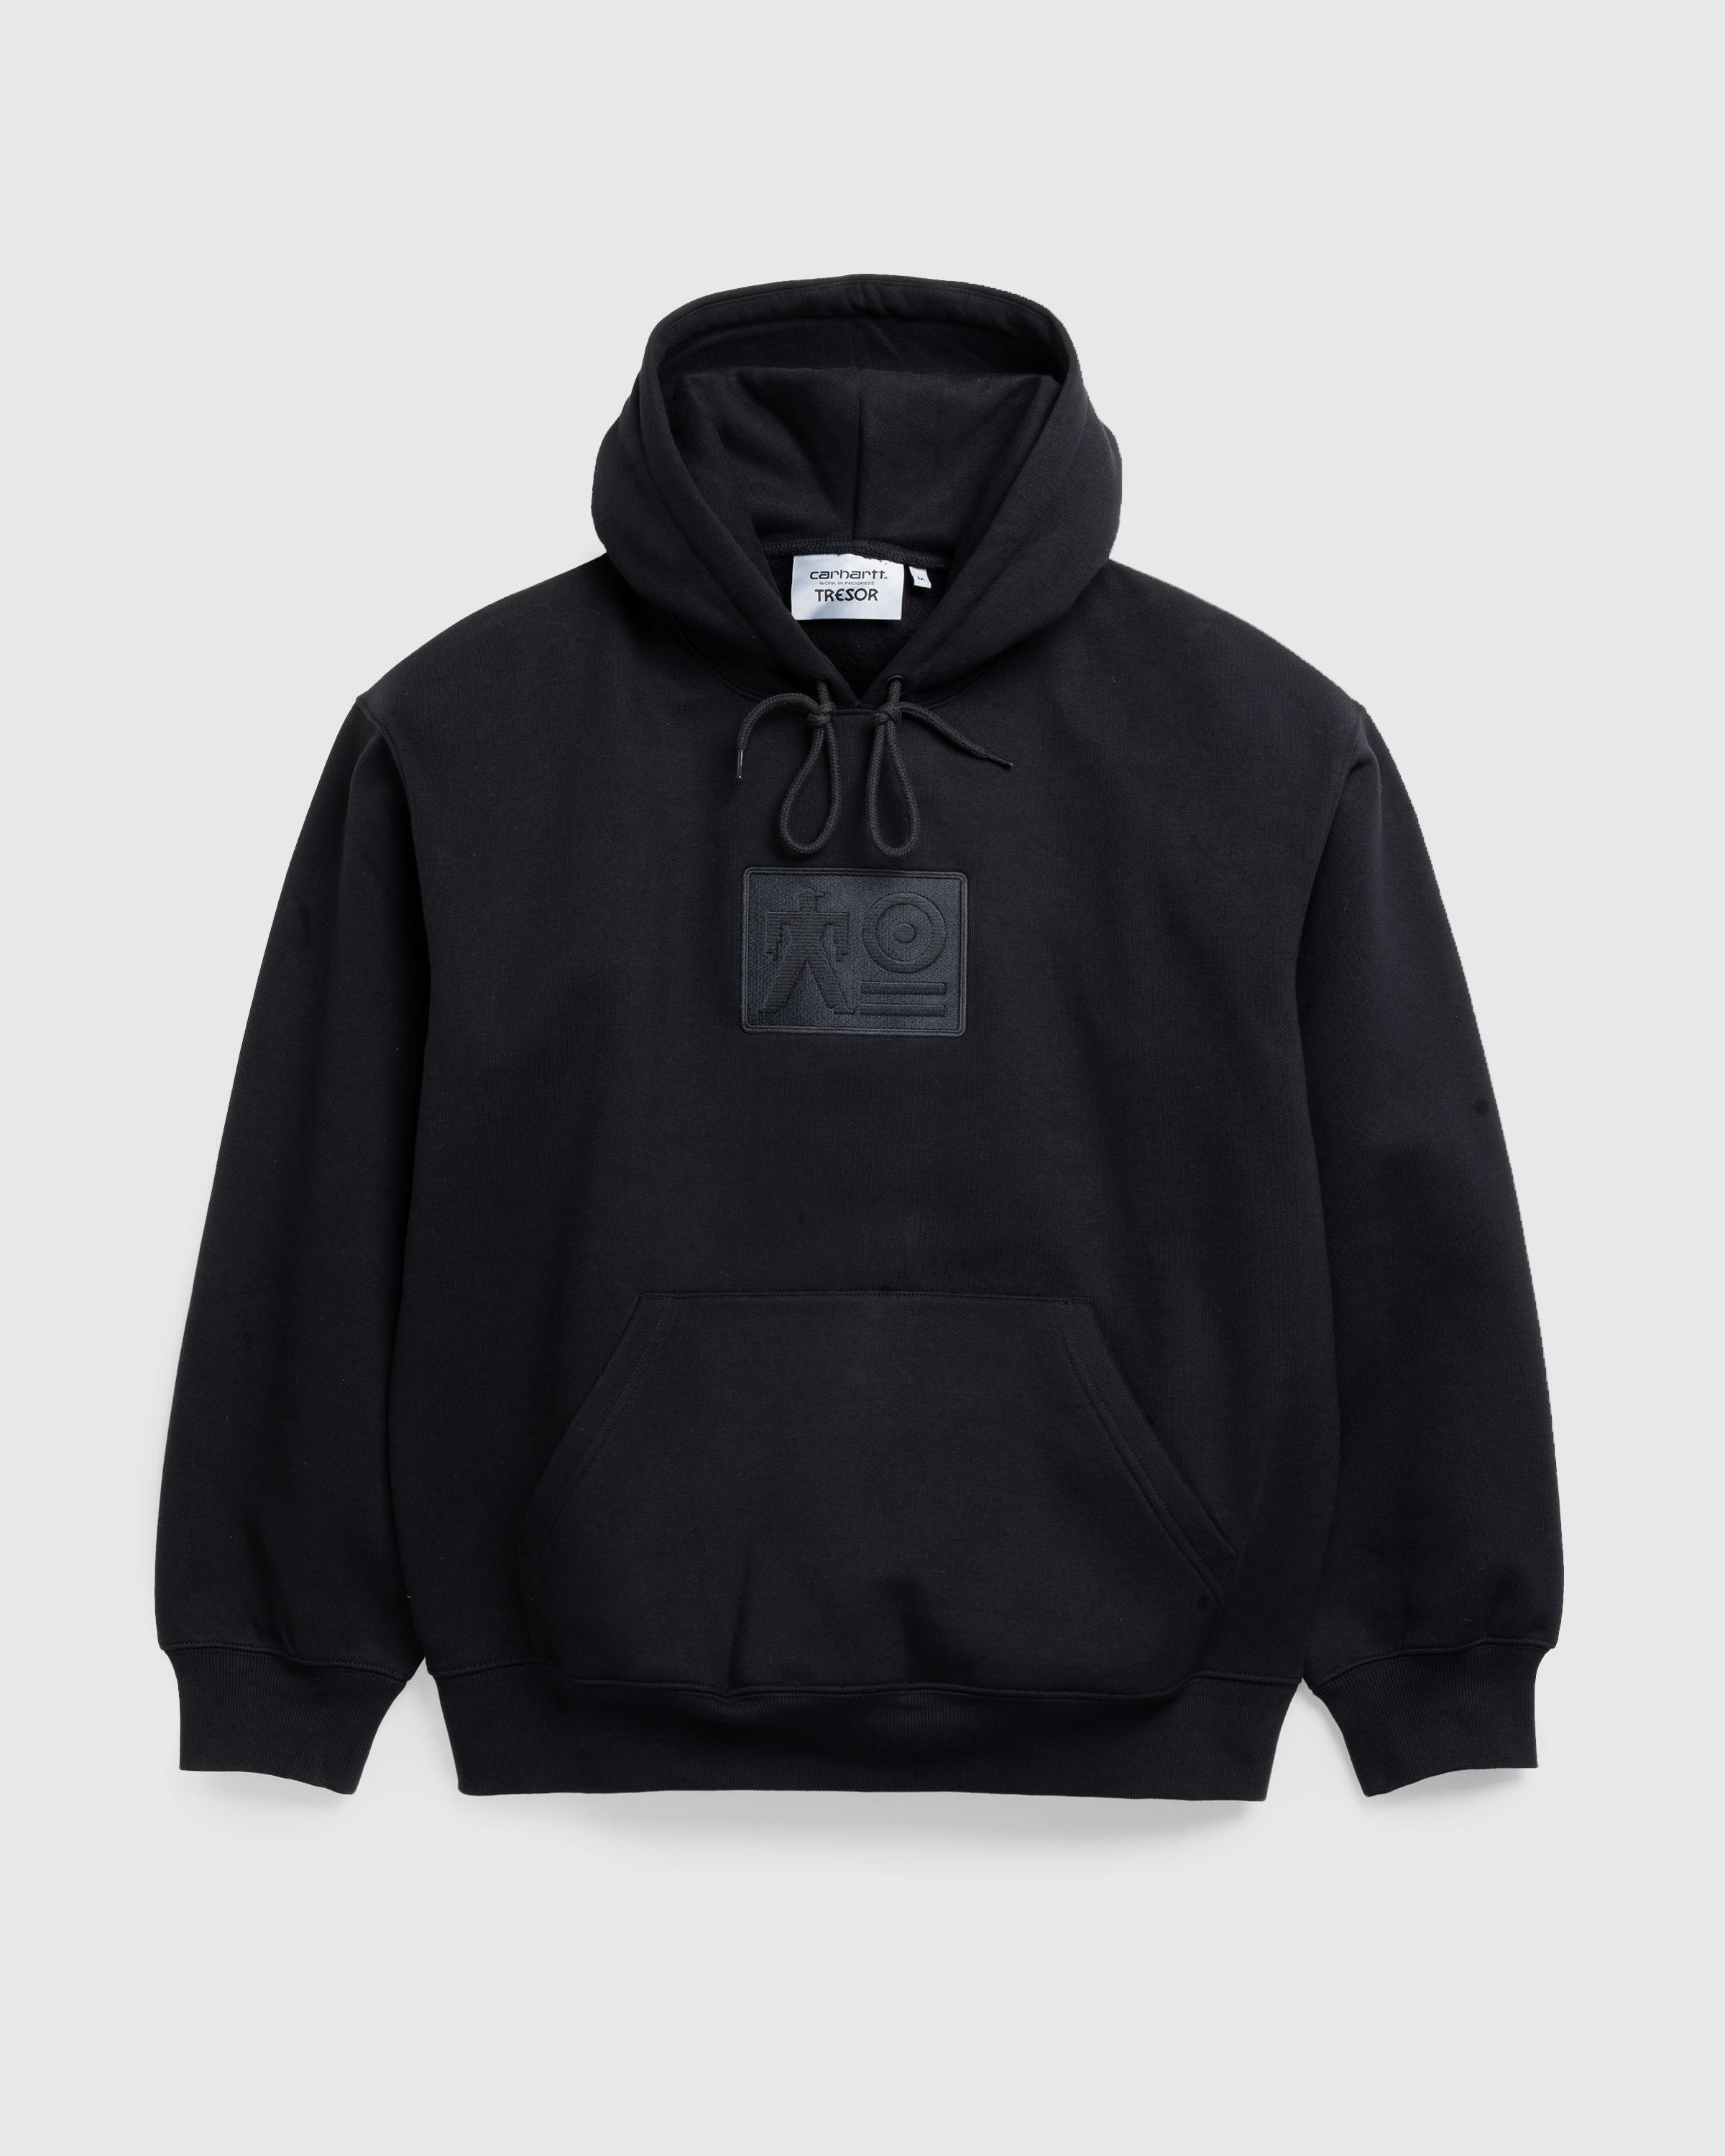 Carhartt WIP x Tresor – Basement Hooded Sweatshirt Black/Grey - Sweats - Black - Image 1